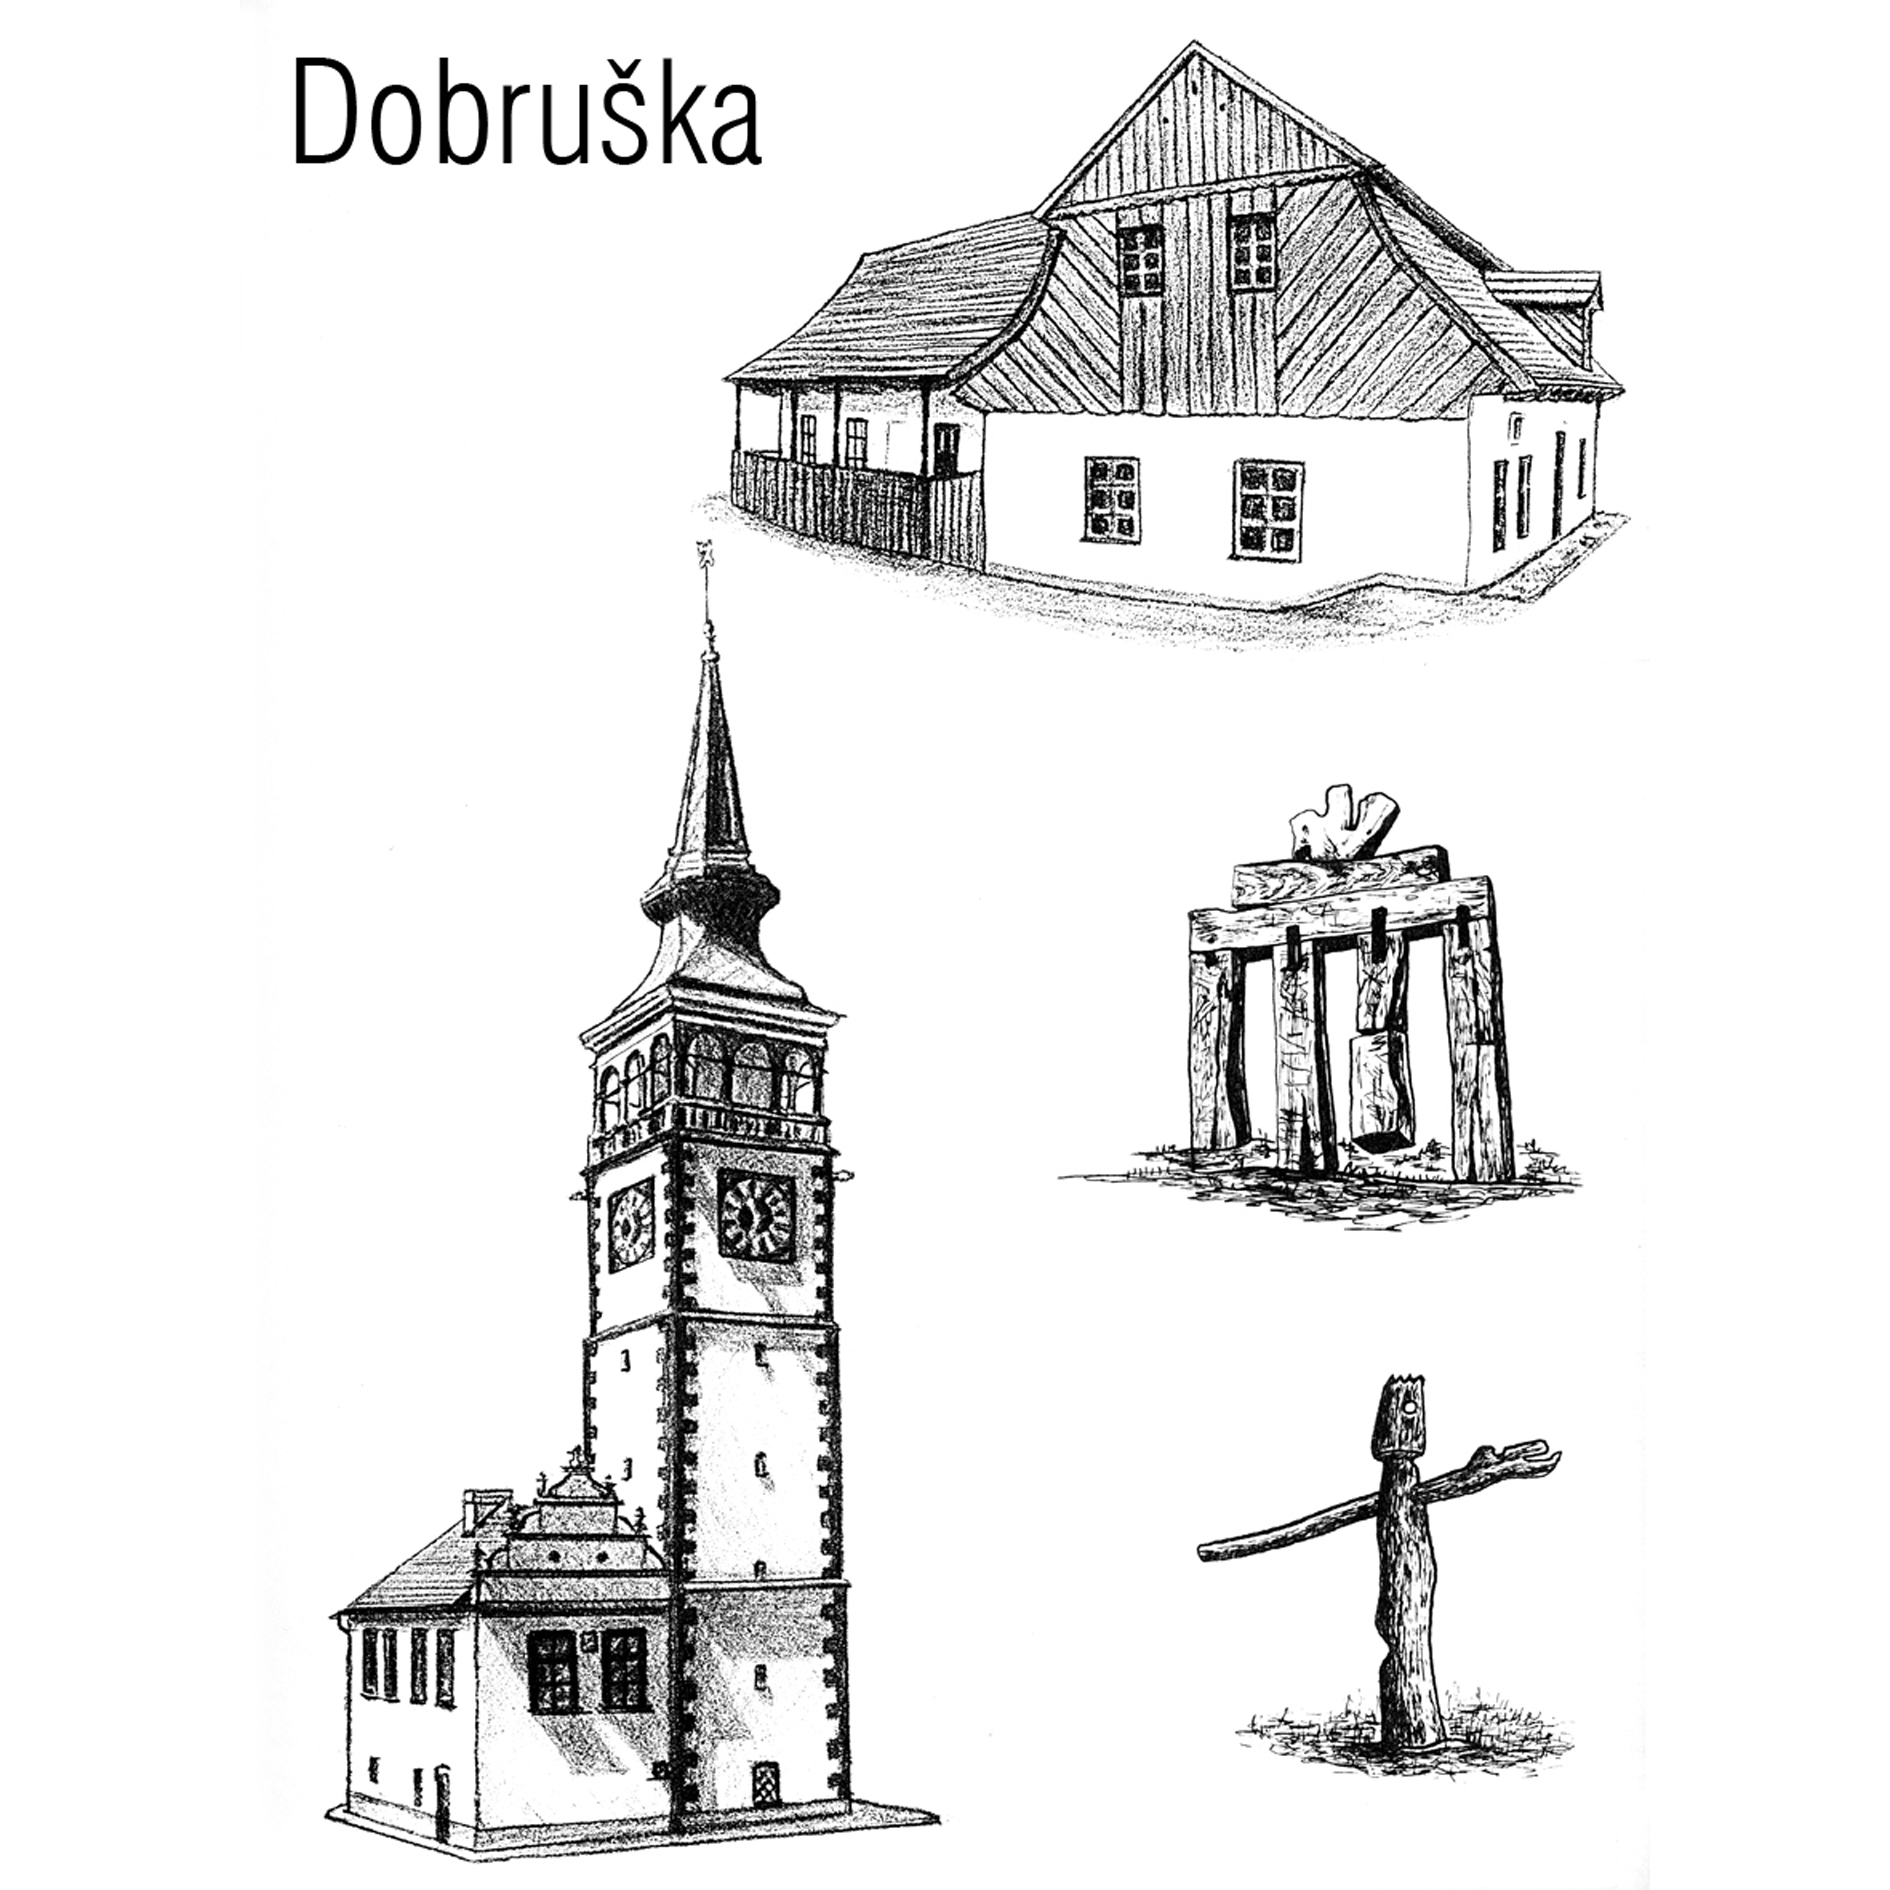 Dobruska_1